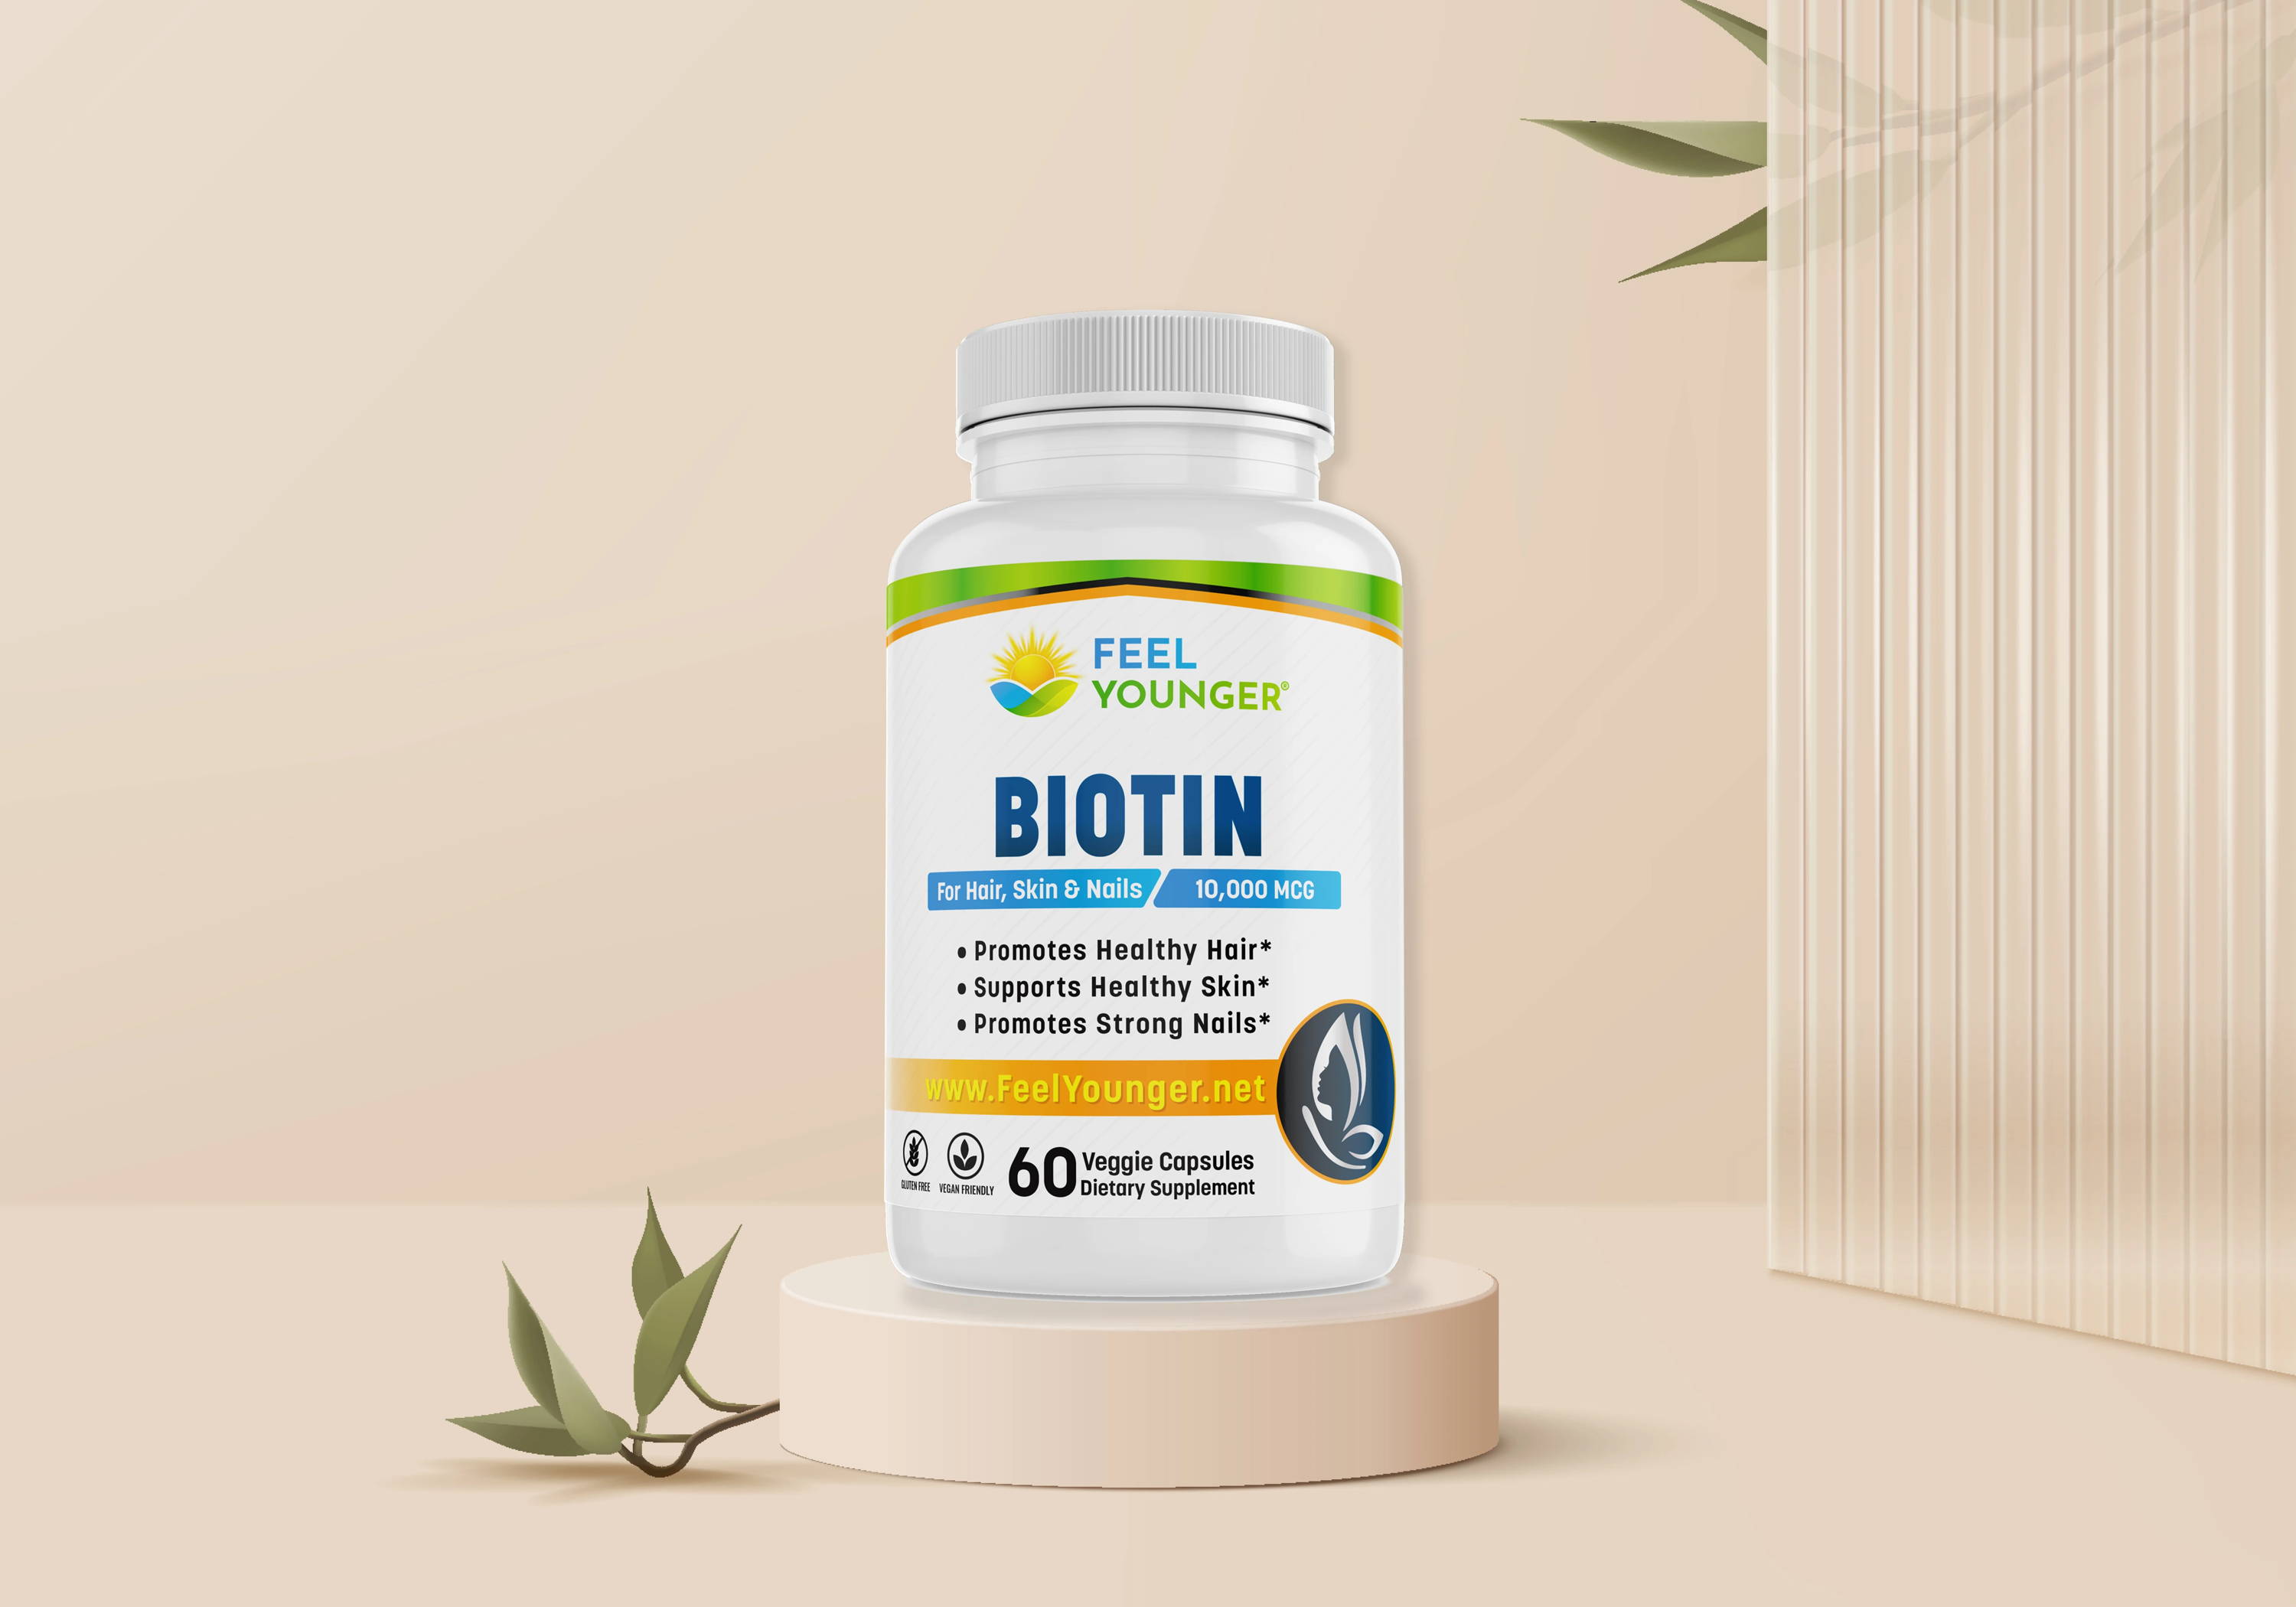 Choosing a high potency biotin or a vegan biotin supplement